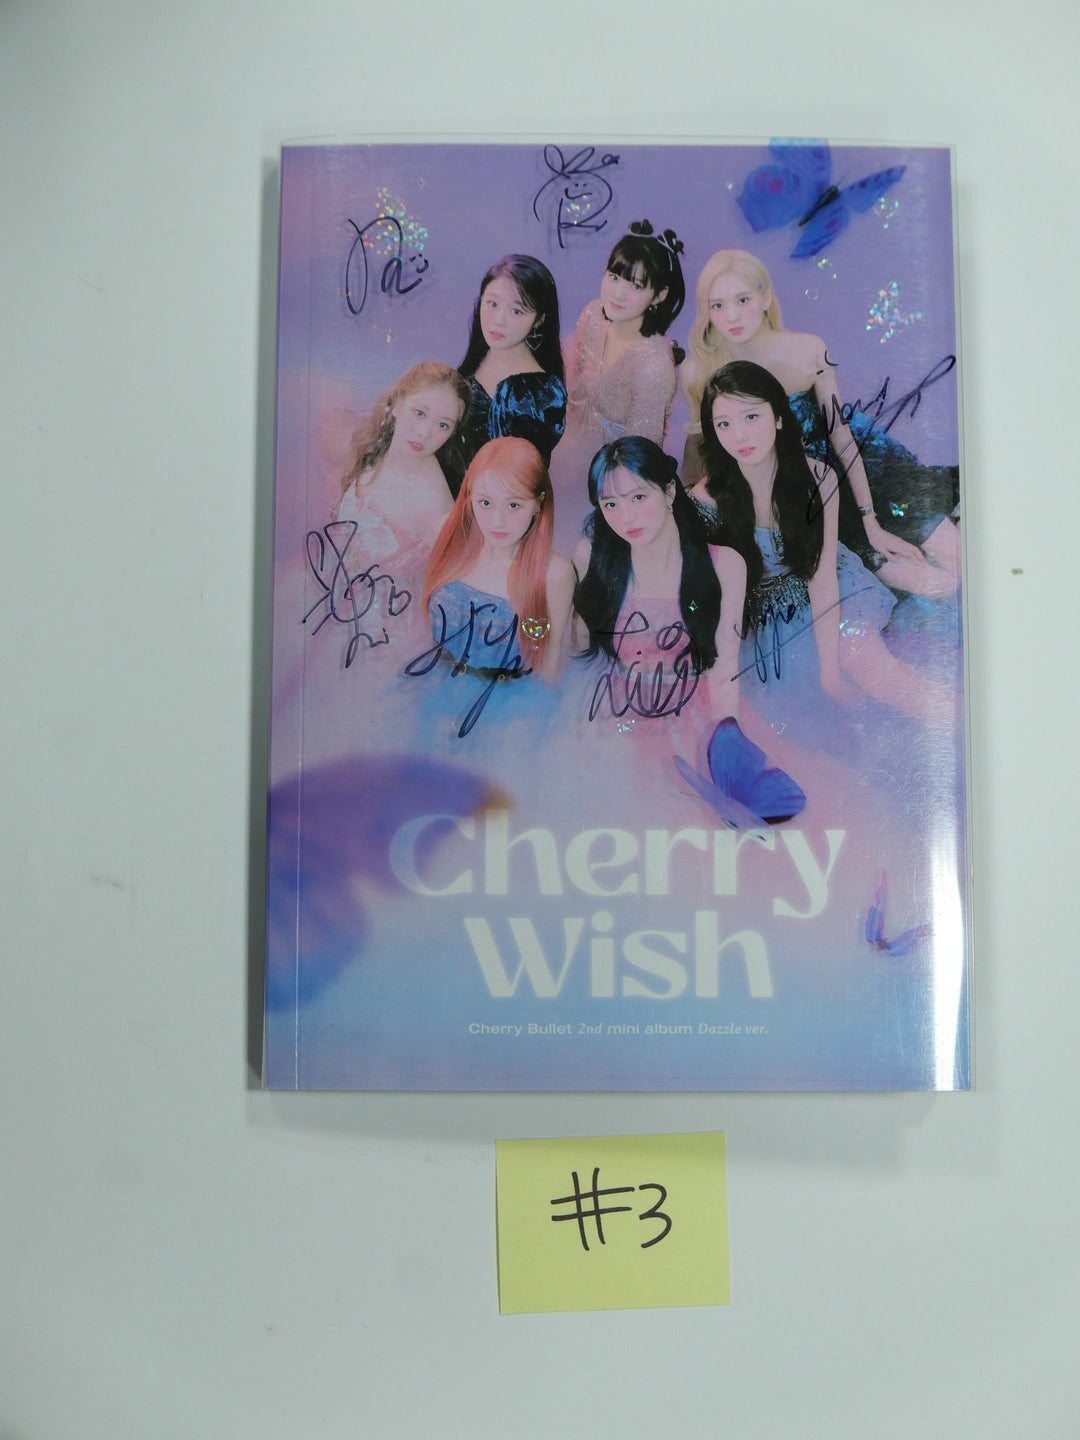 Cherry Bullet 'Cherry Wish' - Hand Autographed(Signed) Promo Album